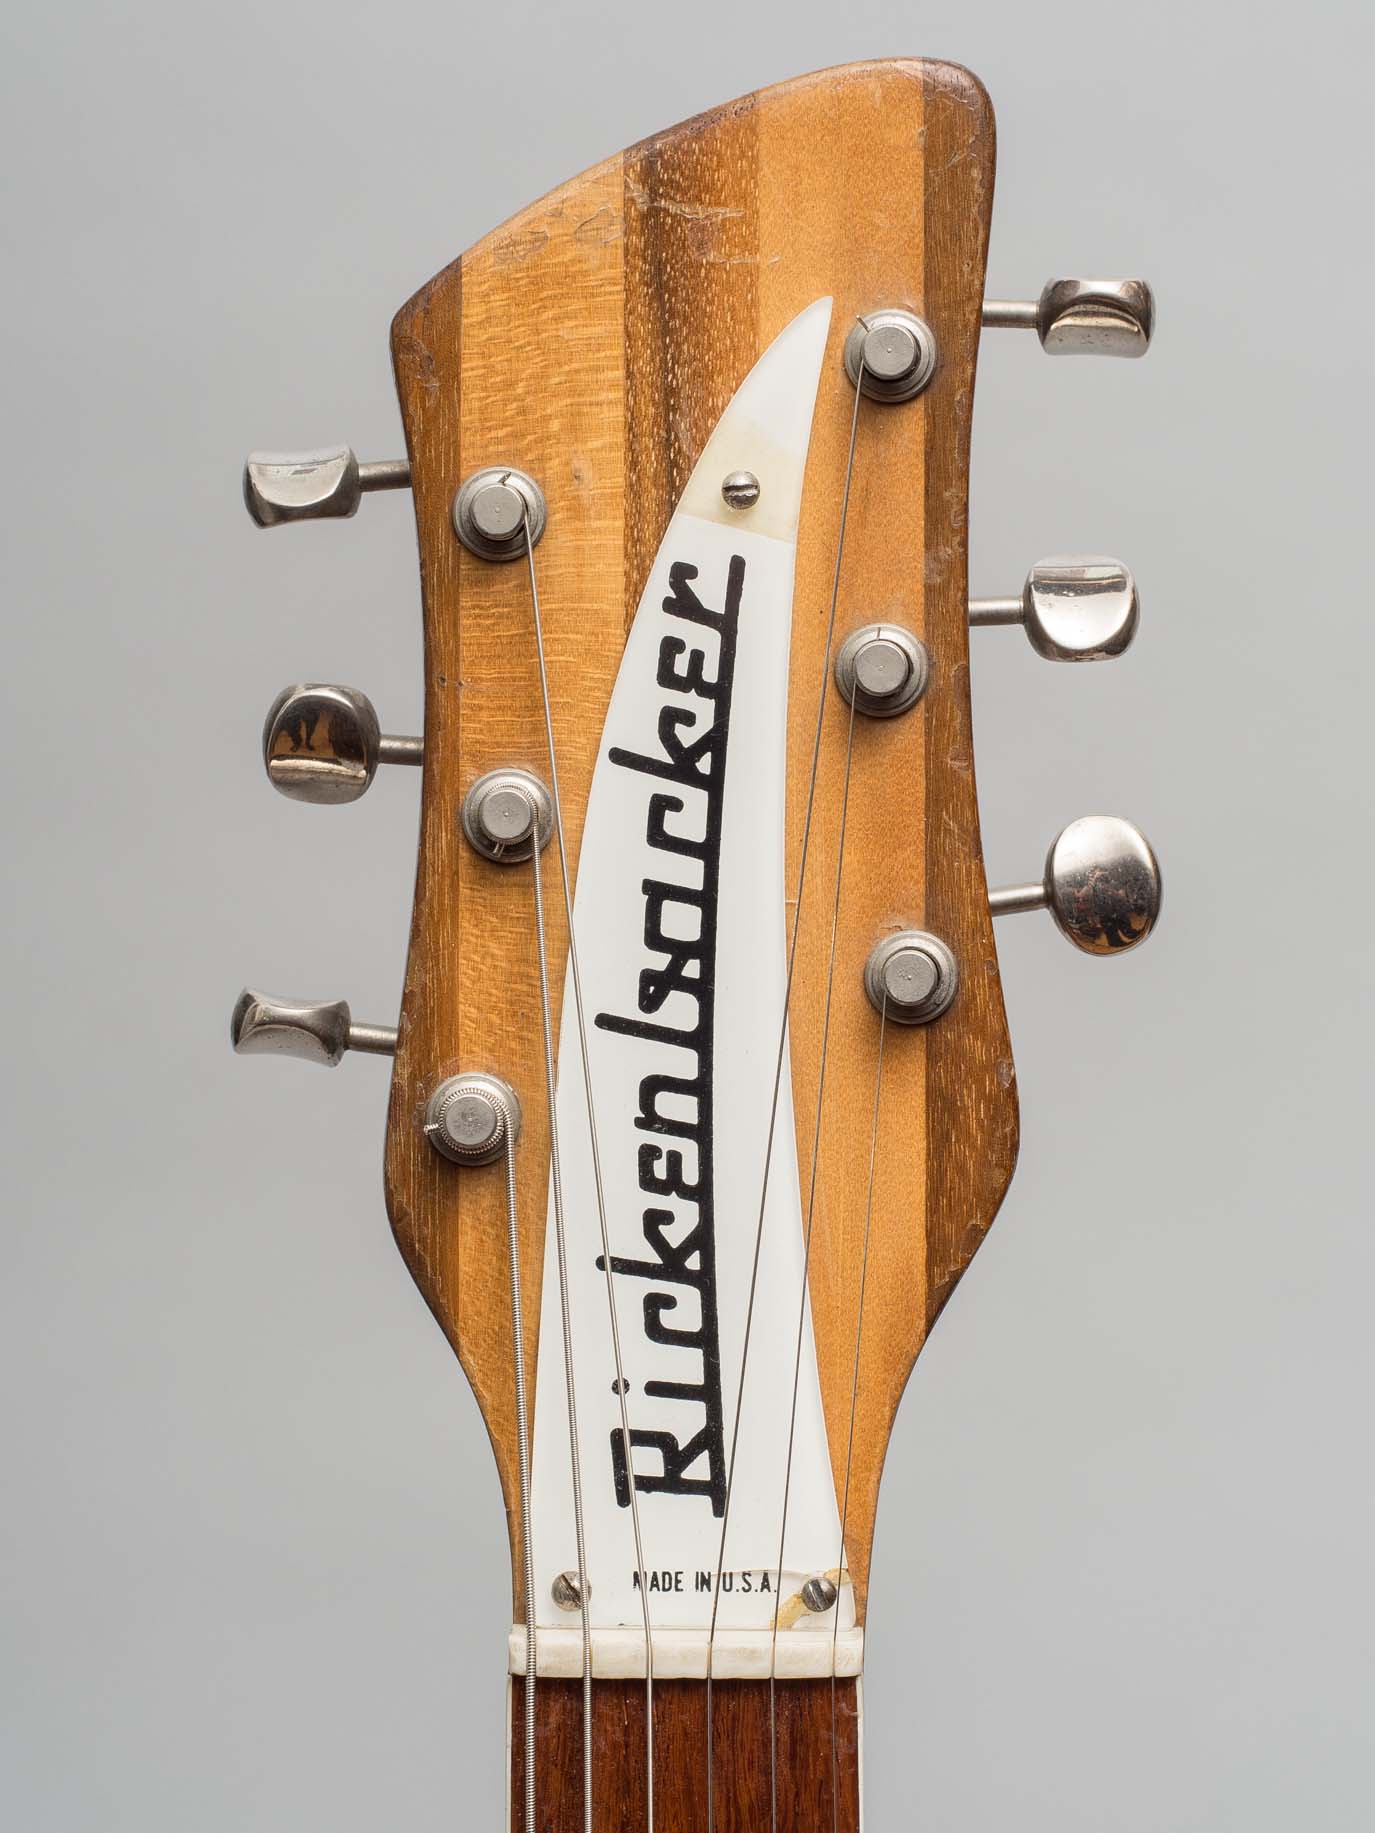 1969 Rickenbacker 381